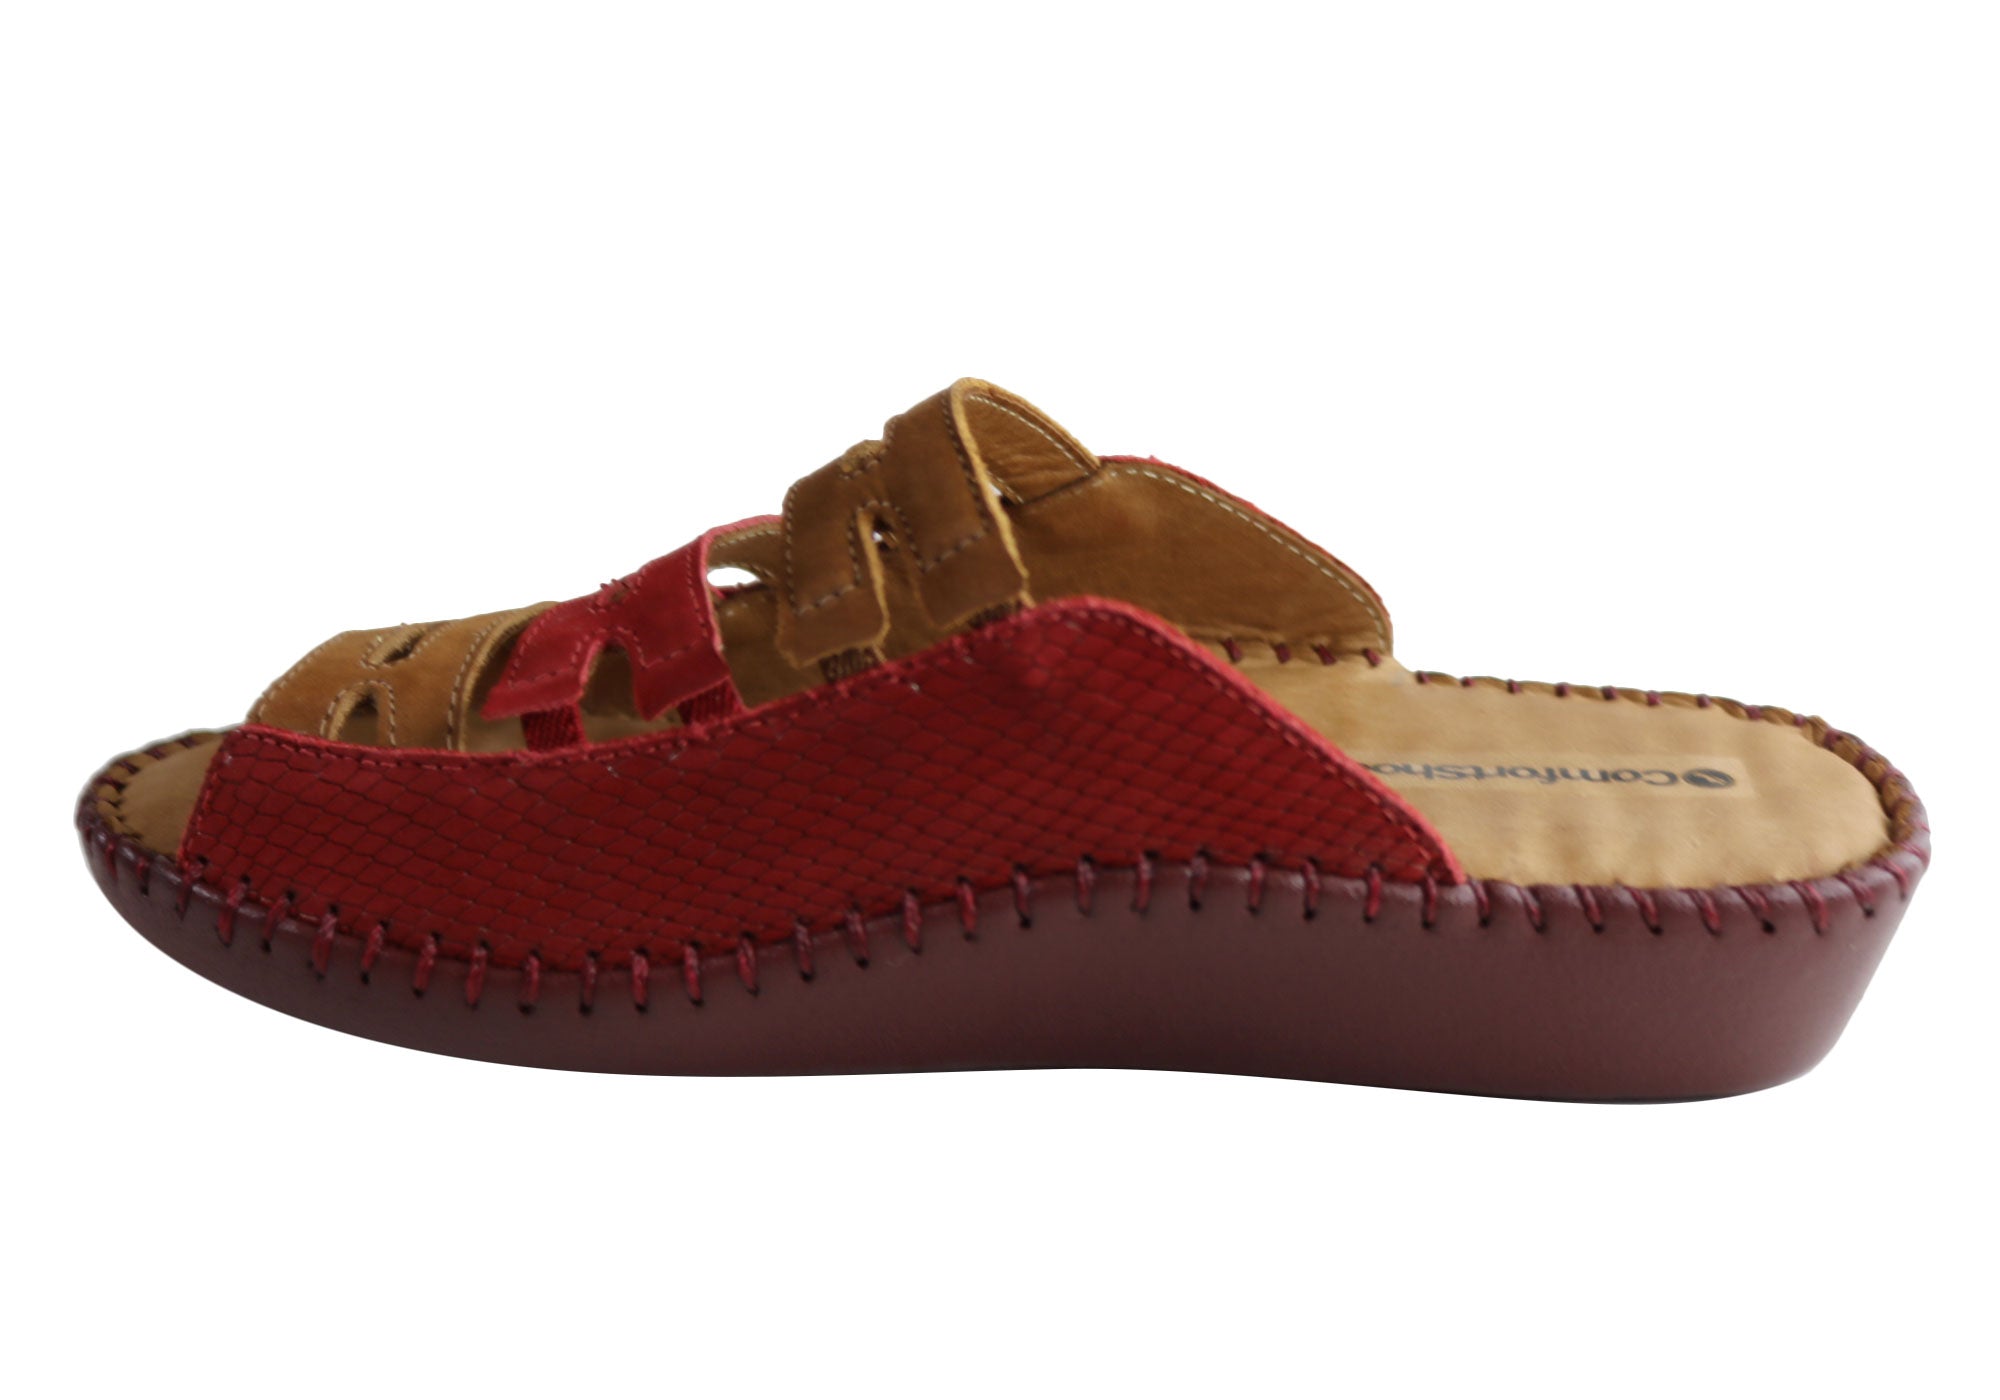 Comfortshoeco Fiona Womens Leather Brazilian Comfort Slides Sandals